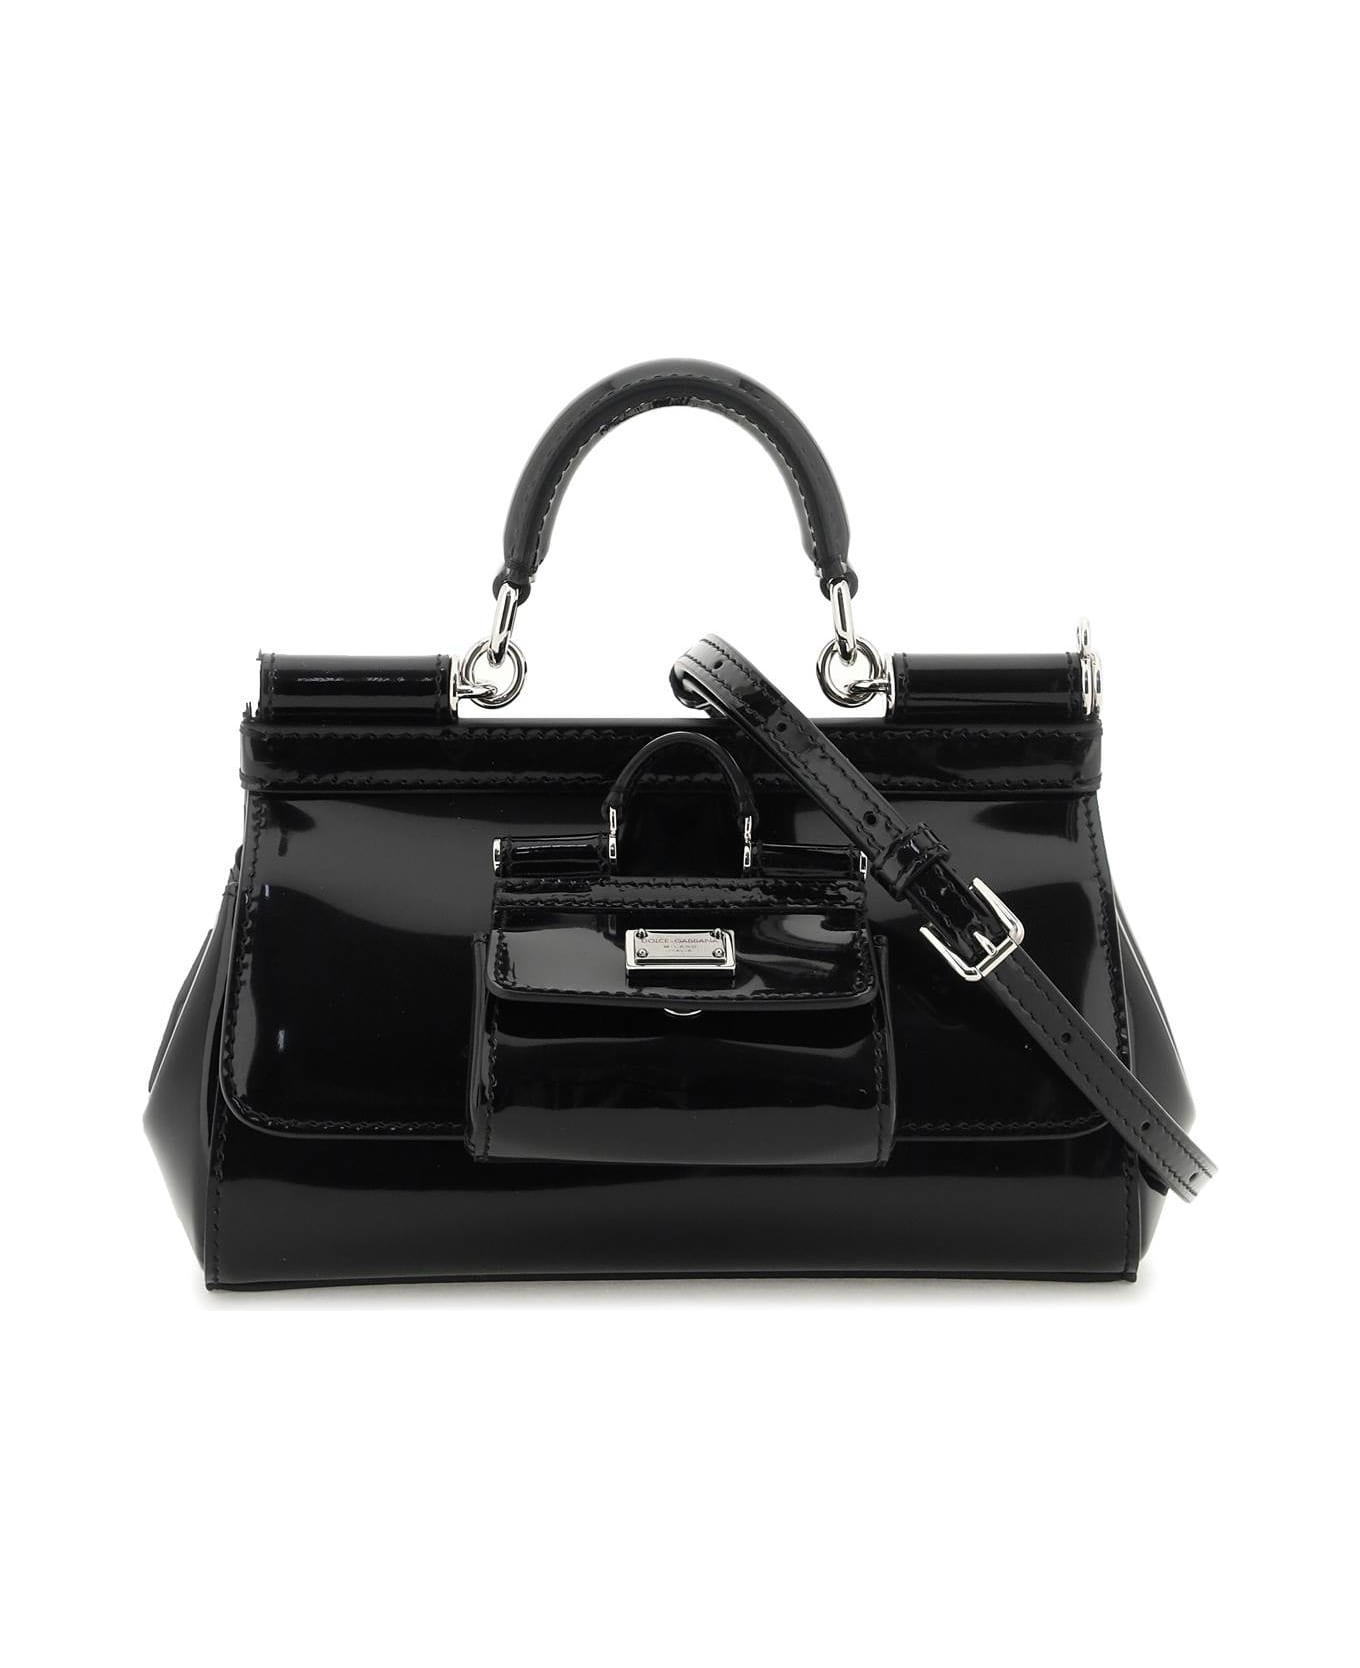 Dolce & Gabbana Sicily Bag With Coin Purse - NERO (Black)